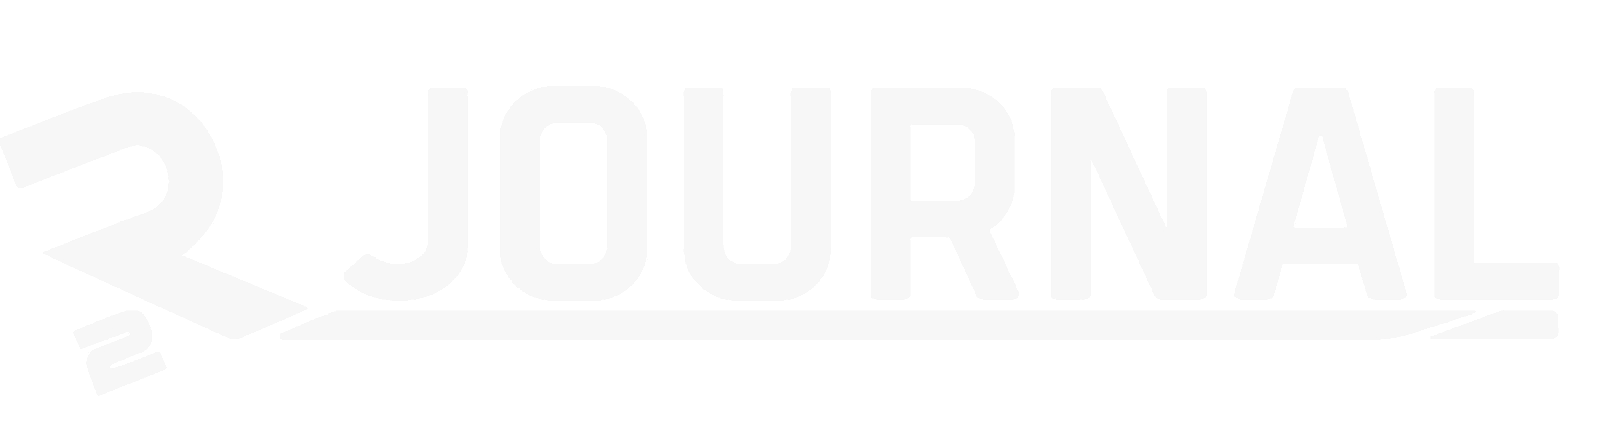 r2 journal logo